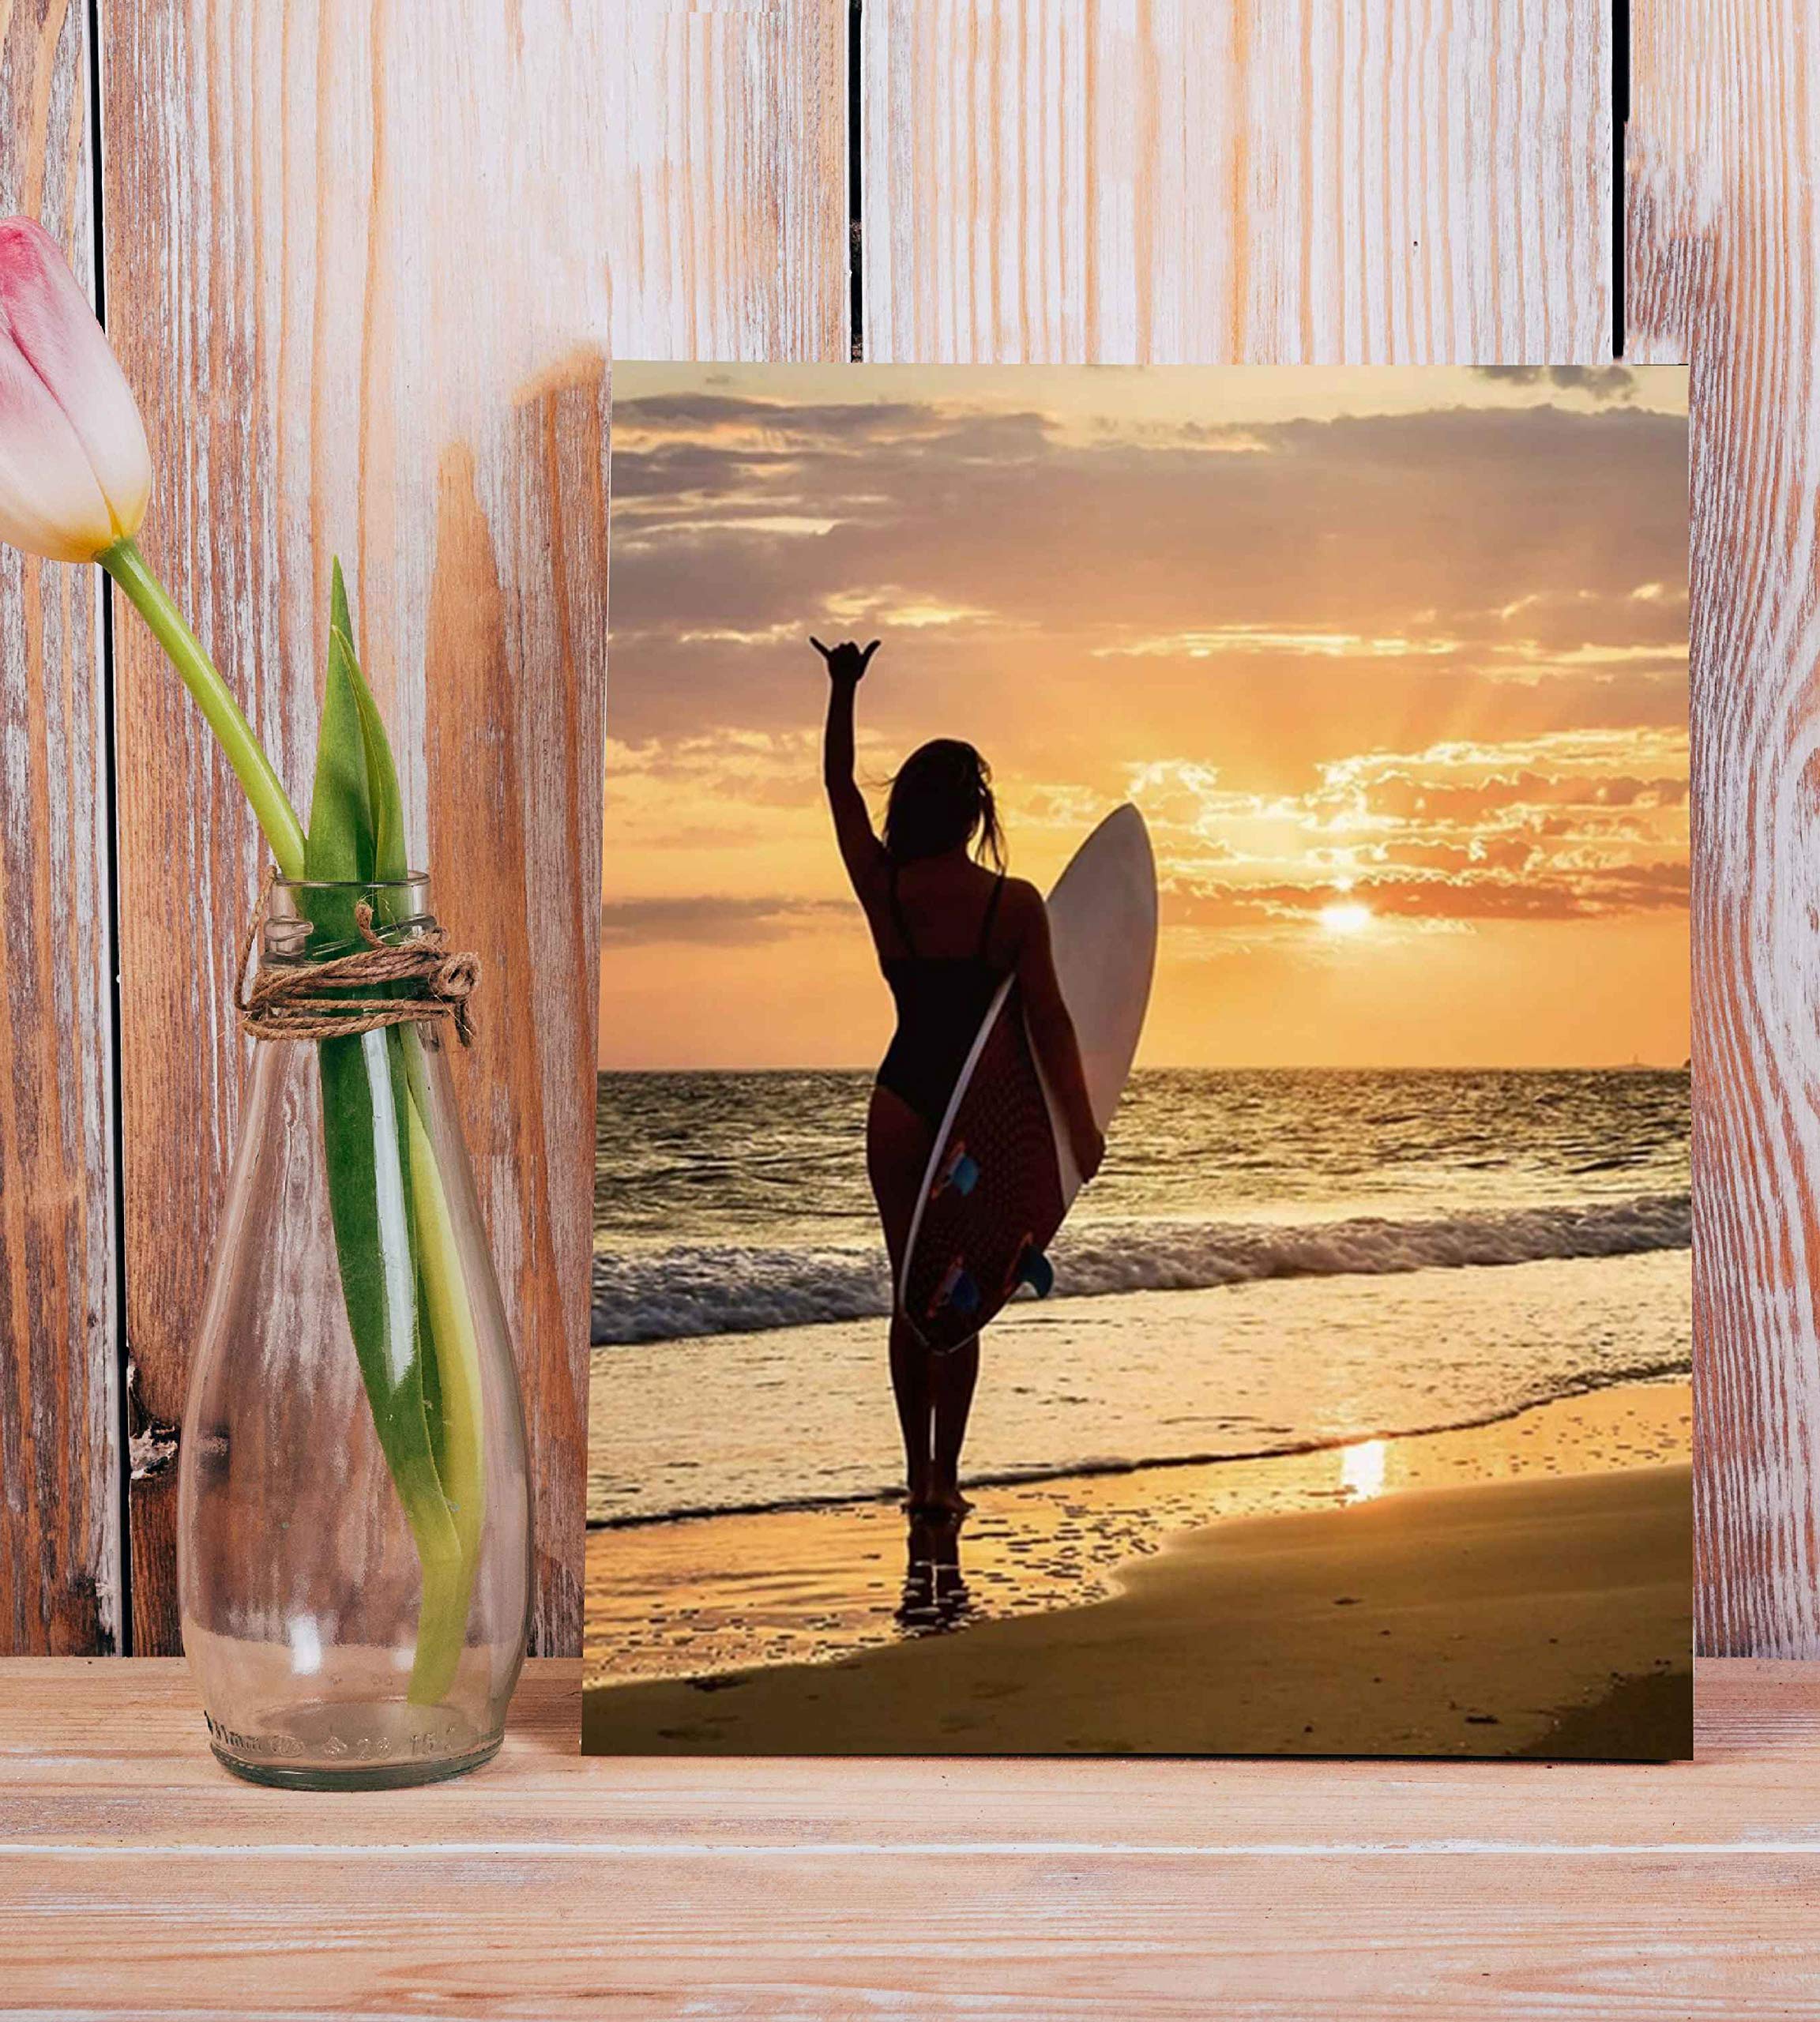 Mahala Surfer Girl - Beach Wall Art, This Beach Sunset Theme Wall Decor Print Is Ideal For Home Decor, Bedroom Wall Art, Lake House Decor, Office Decor, Ocean & Surfing Theme Decor. Unframed - 8x10